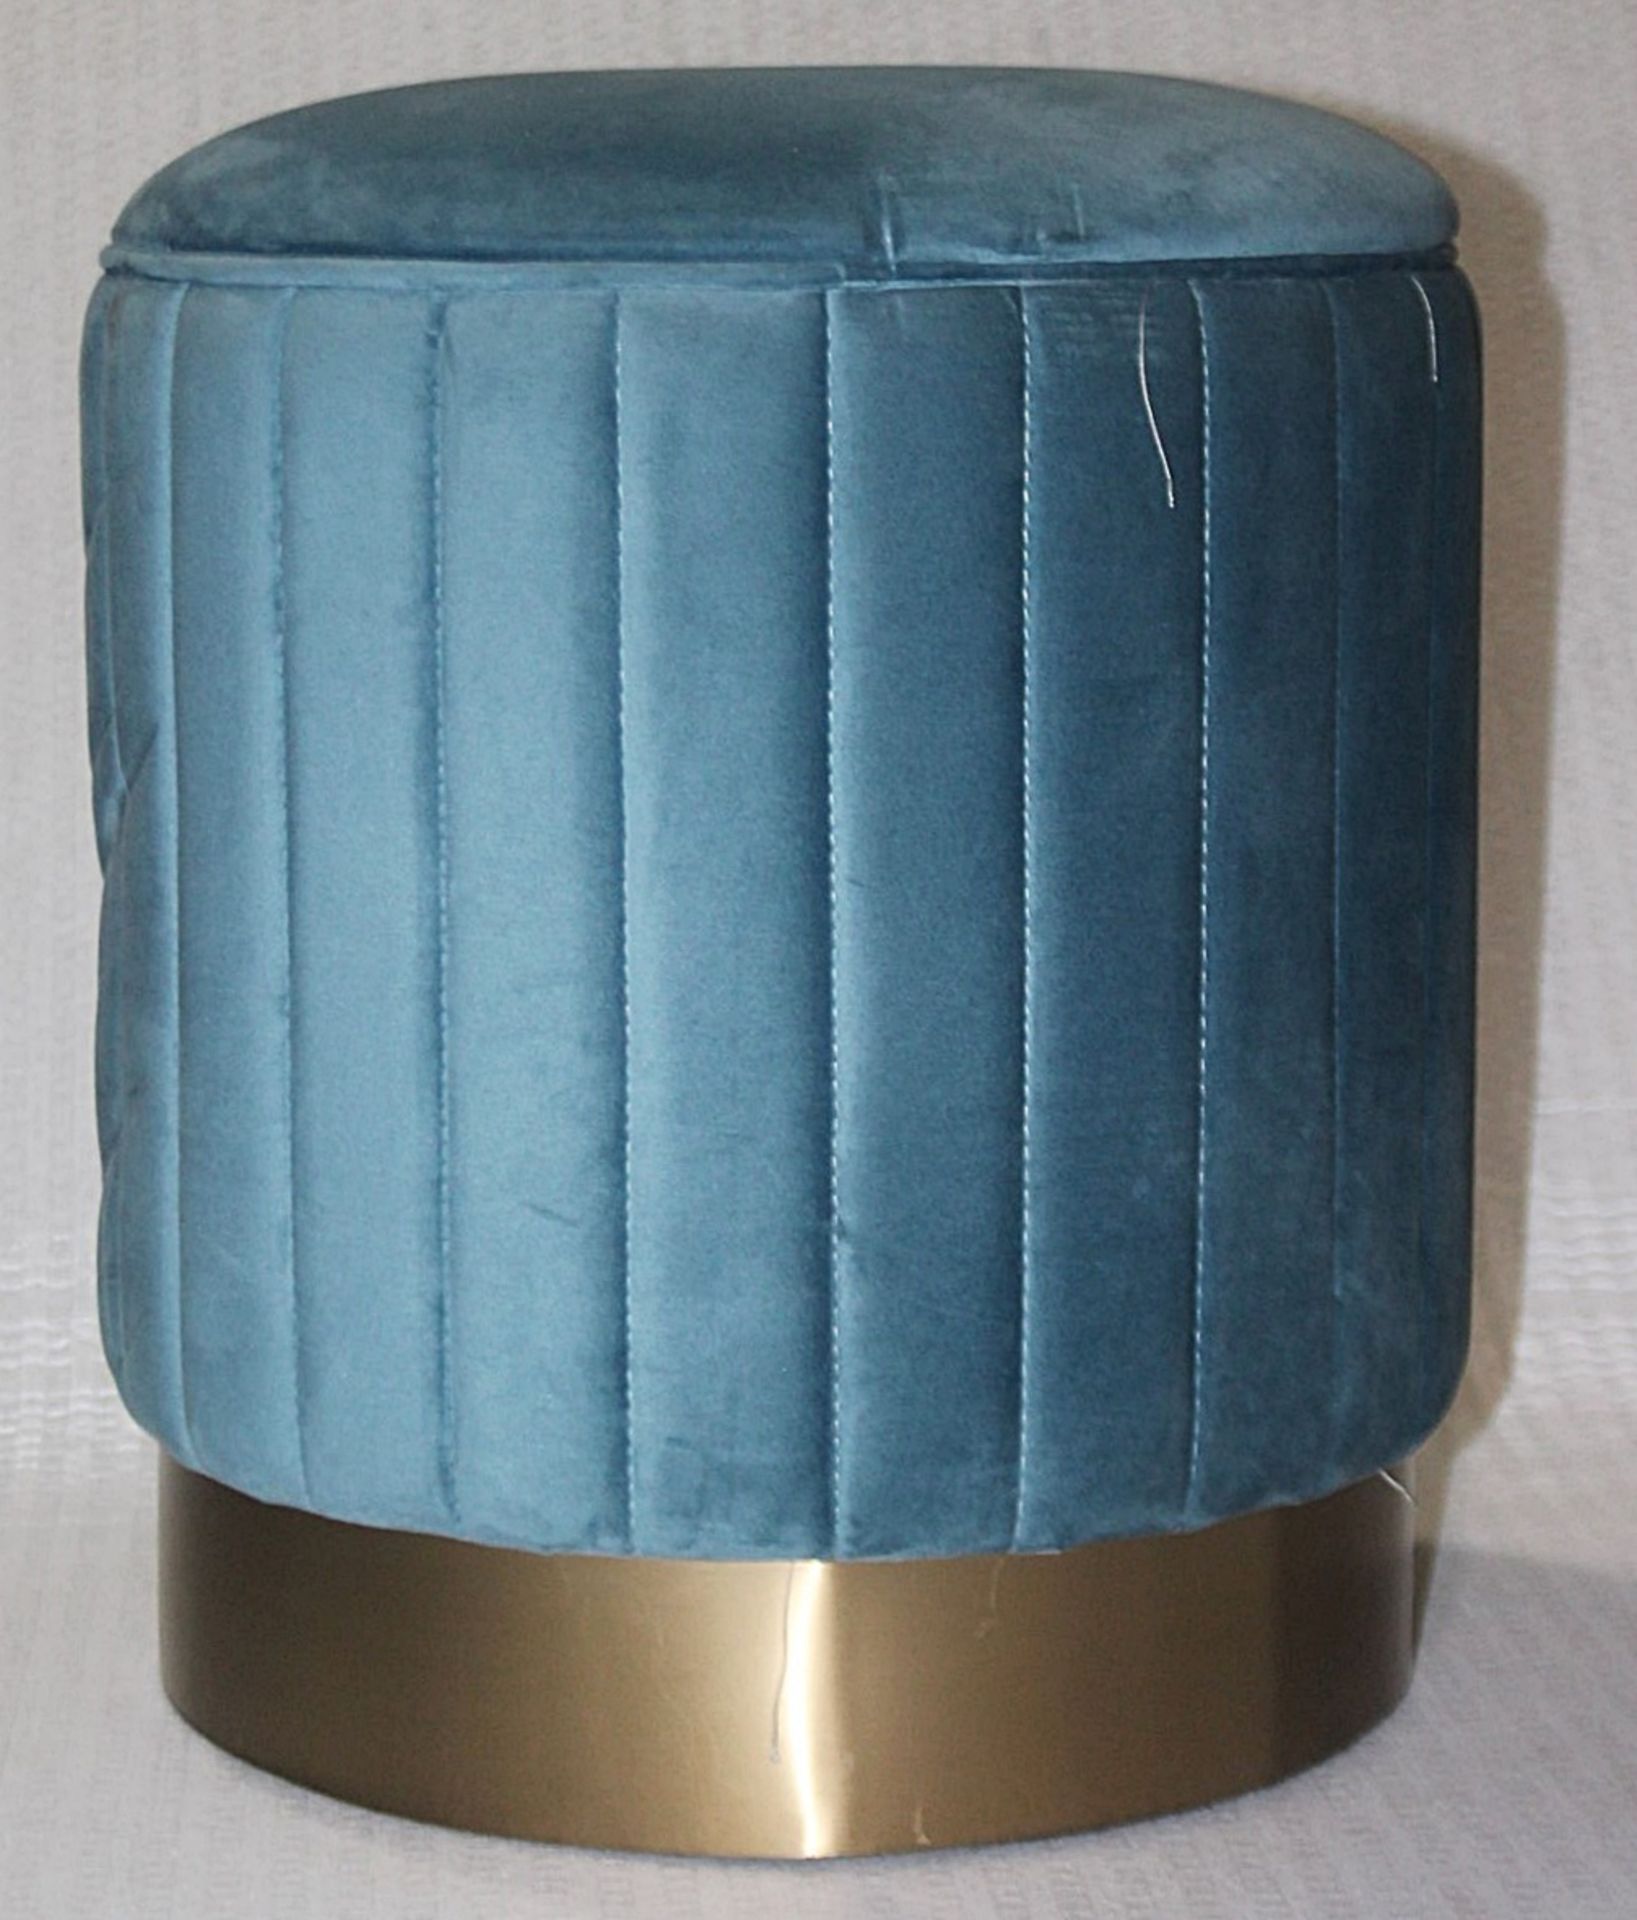 1 x EICHHOLTZ 'Allegra' Luxury Teal Velvet Vanity Stool, With A Brass Base - Original Price £850.00 - Image 6 of 6